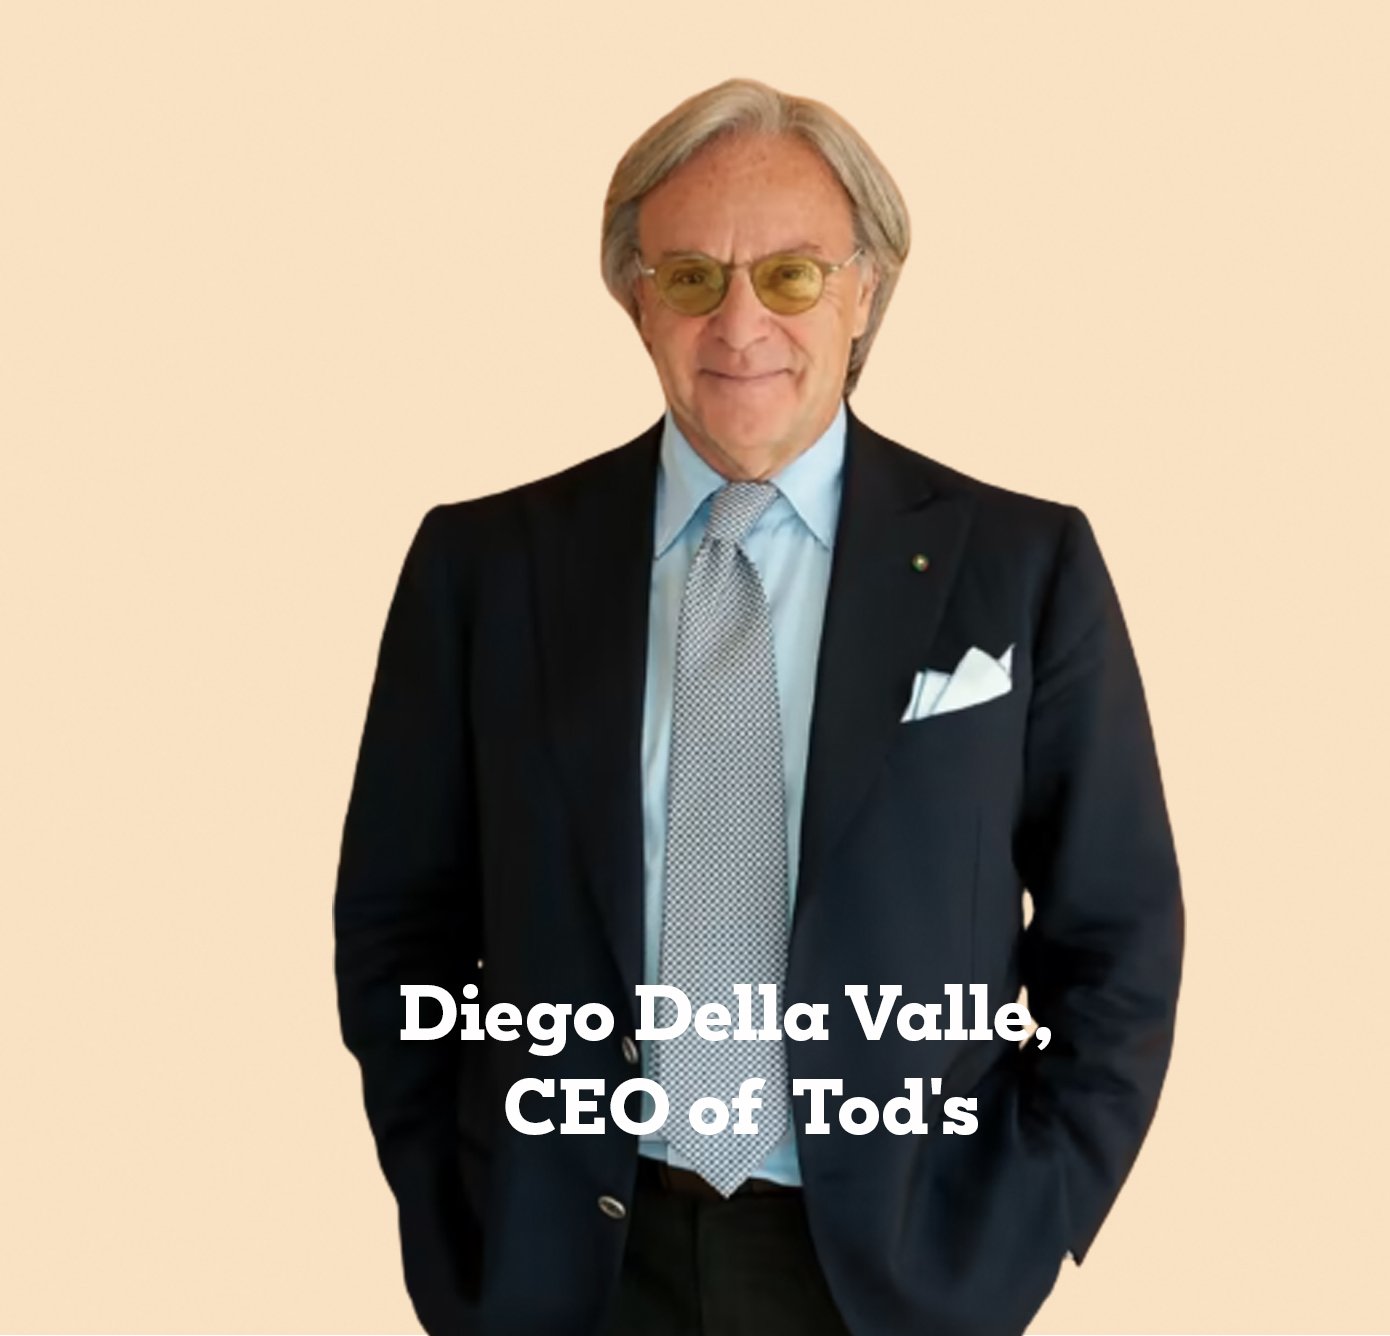 Diego Della Valle, CEO of Tod's